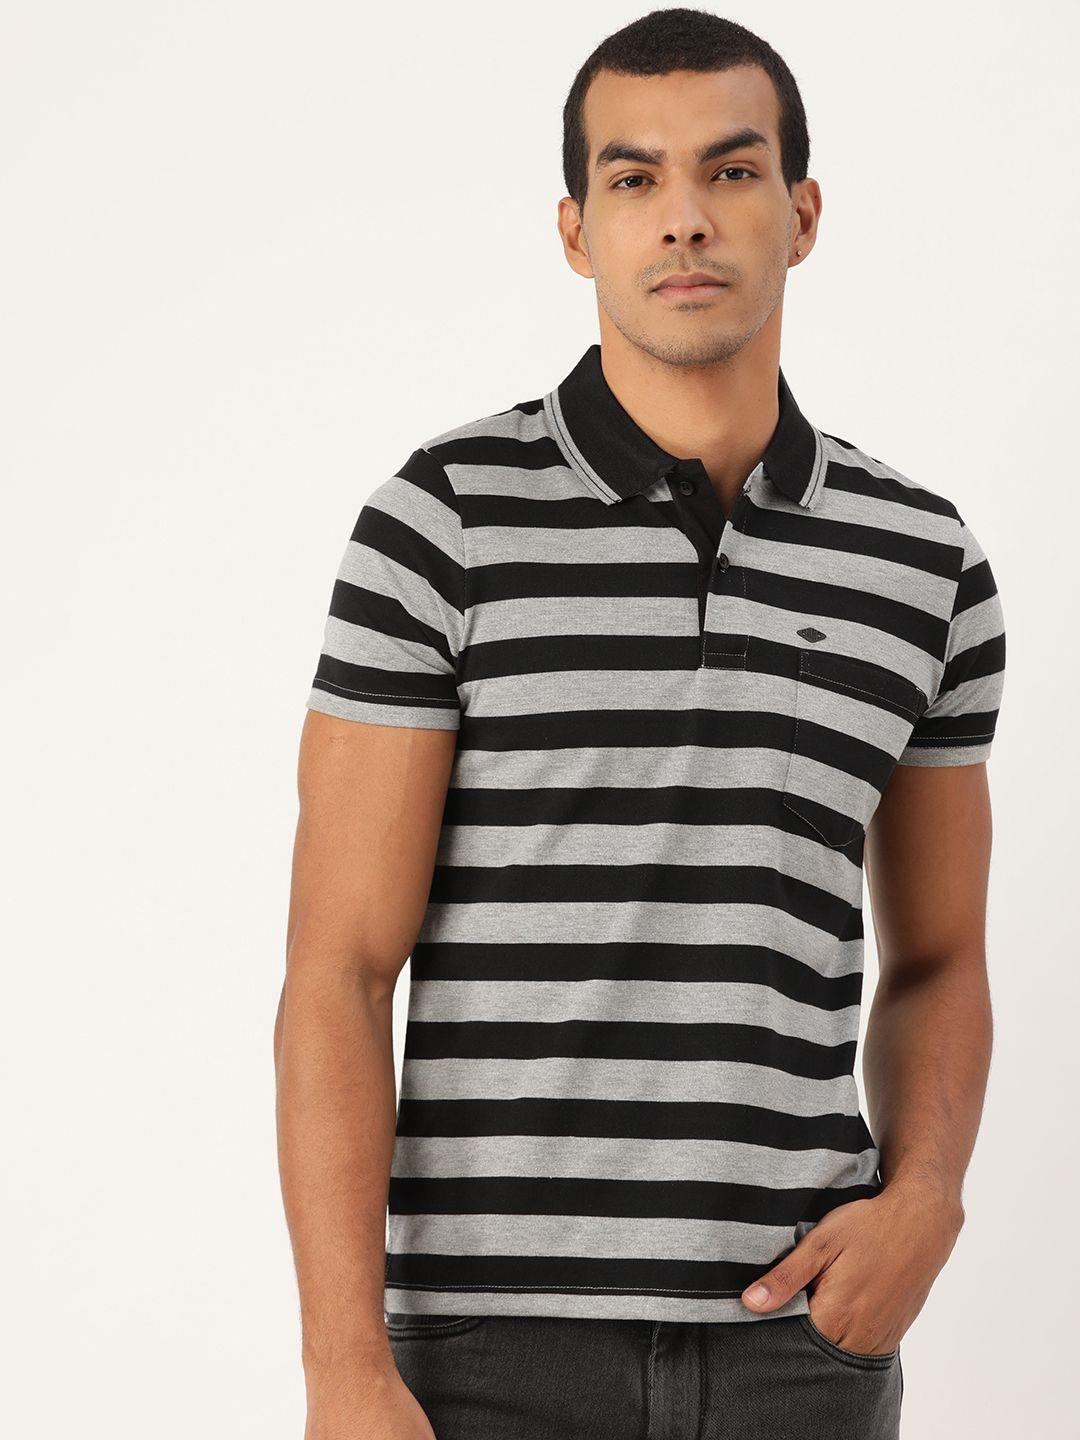 sweet-dreams-men-grey-melange-&-black-striped-athleisure-t-shirt